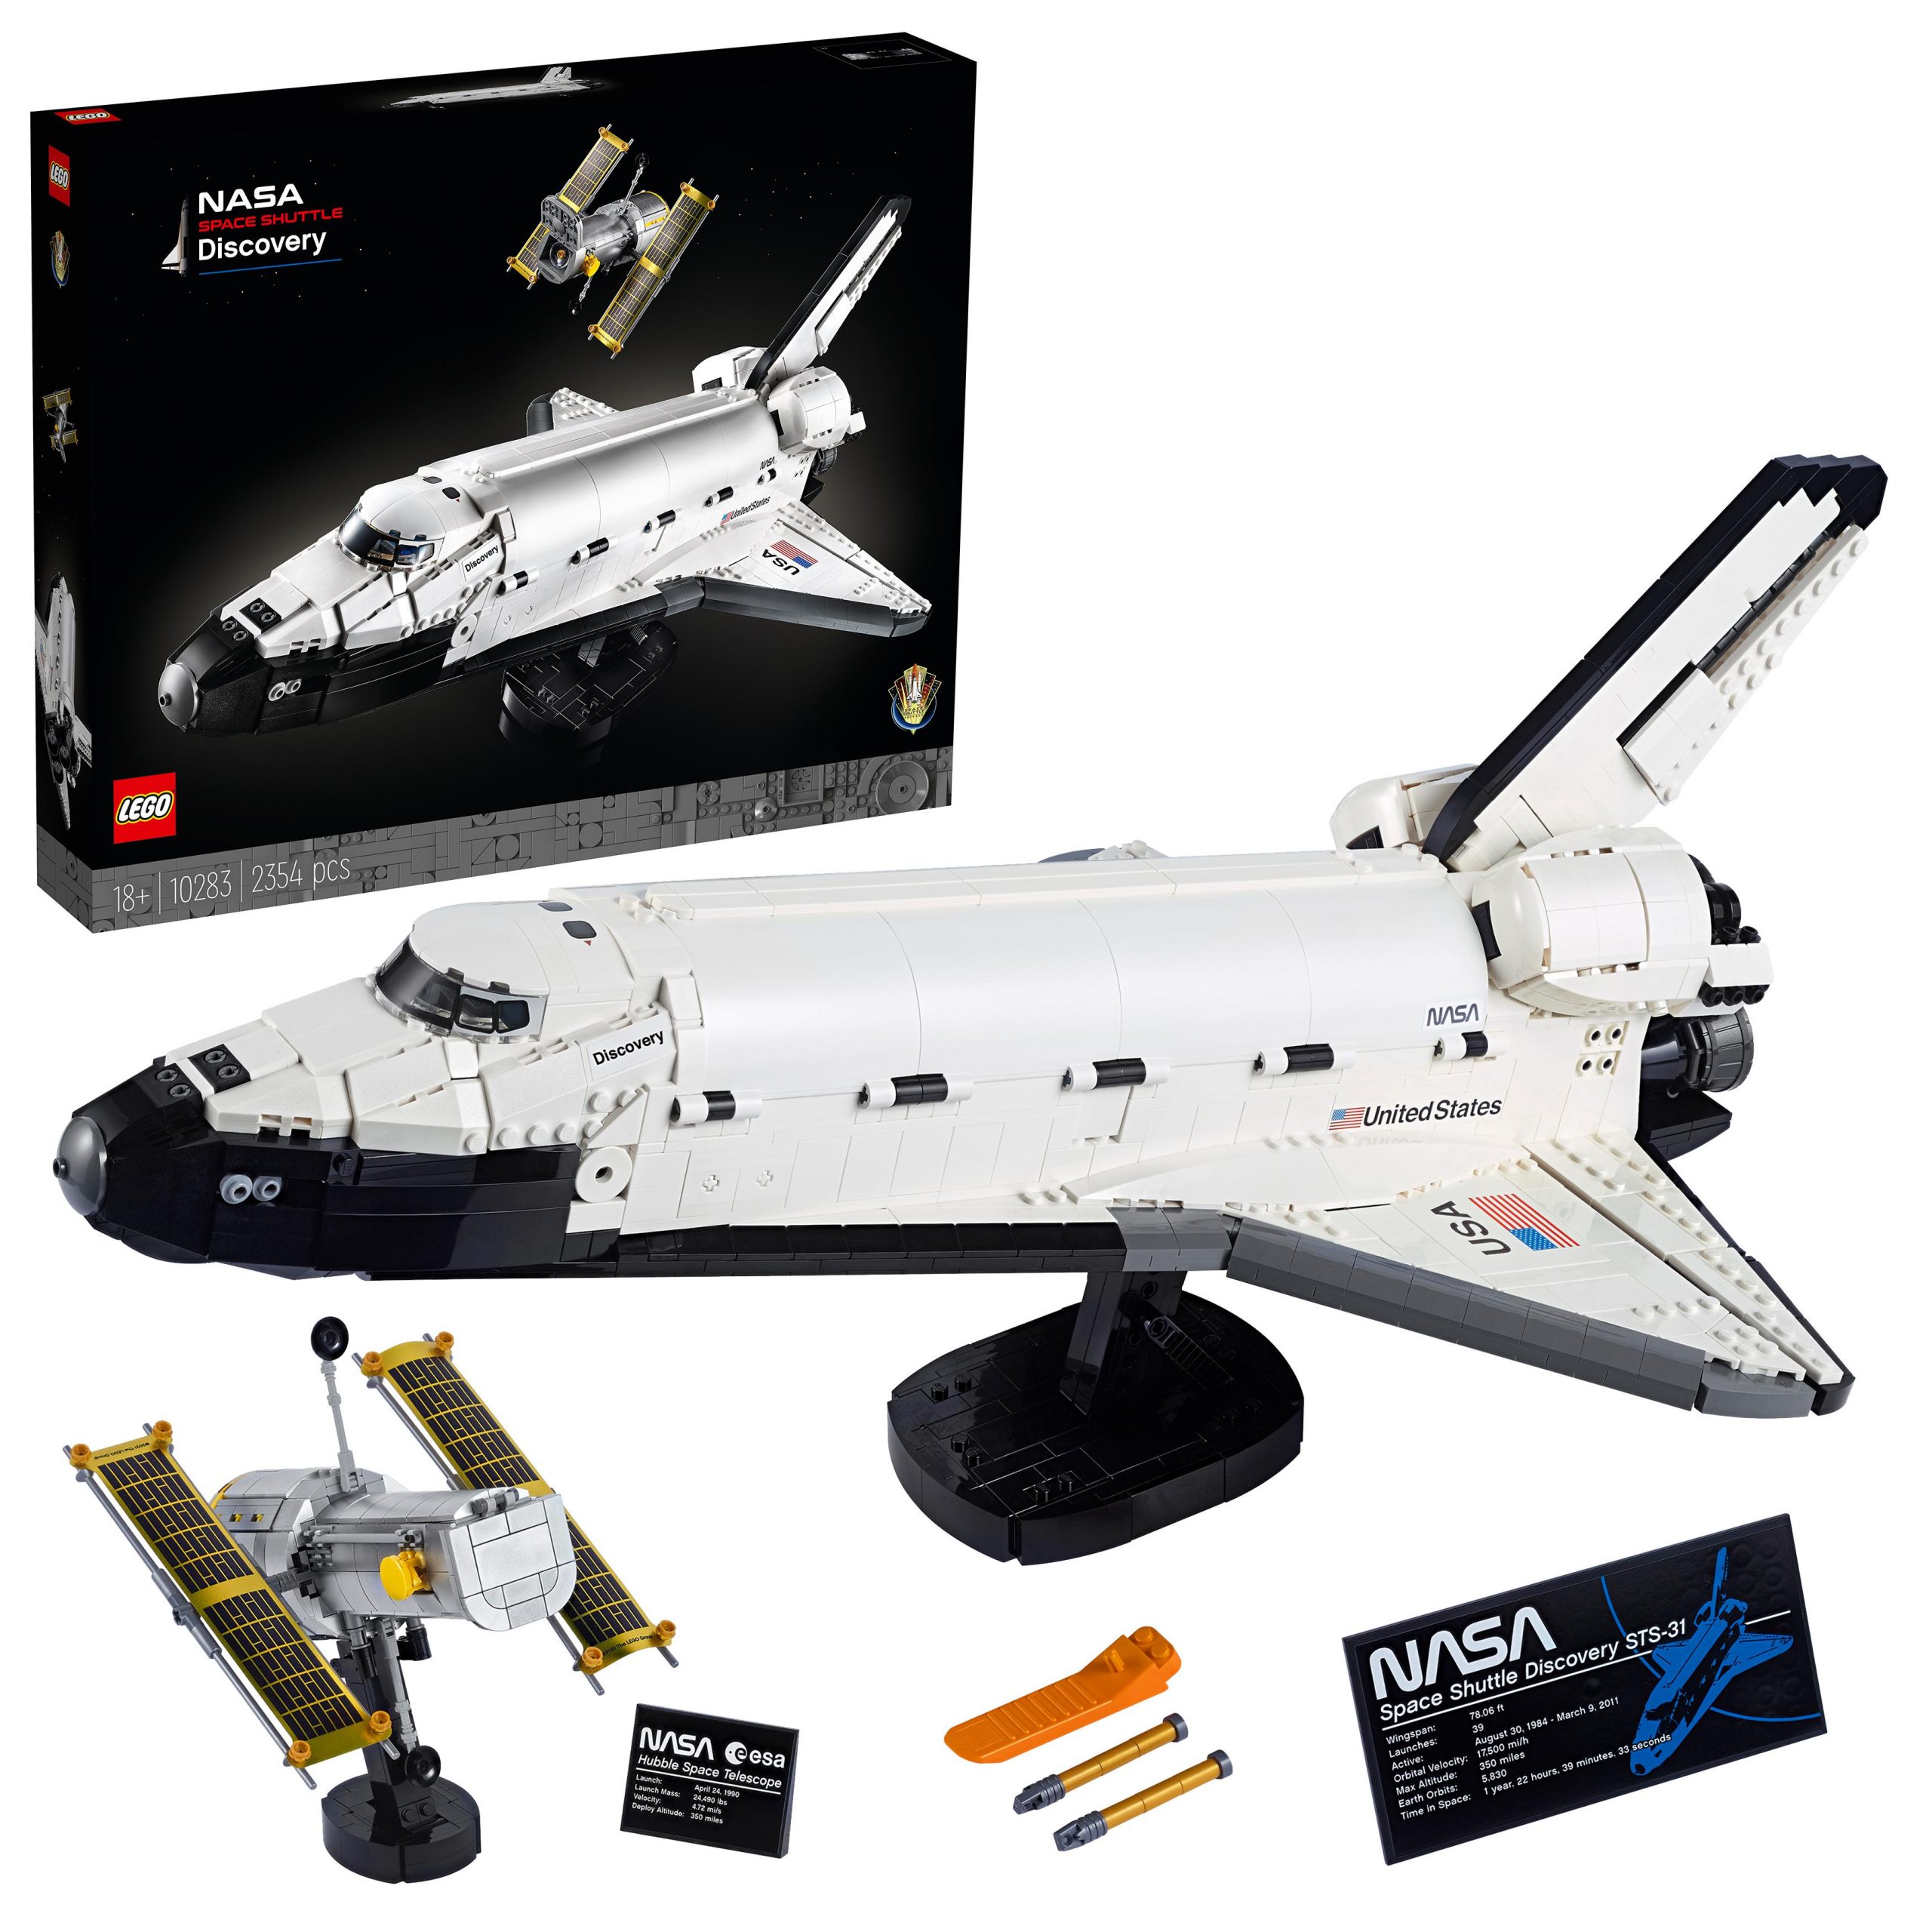 Lego creator expert nasa space shuttle discovery, set per adulti, astronave razzo spaziale da collezione, 10283 - LEGO CREATOR EXPERT, Lego